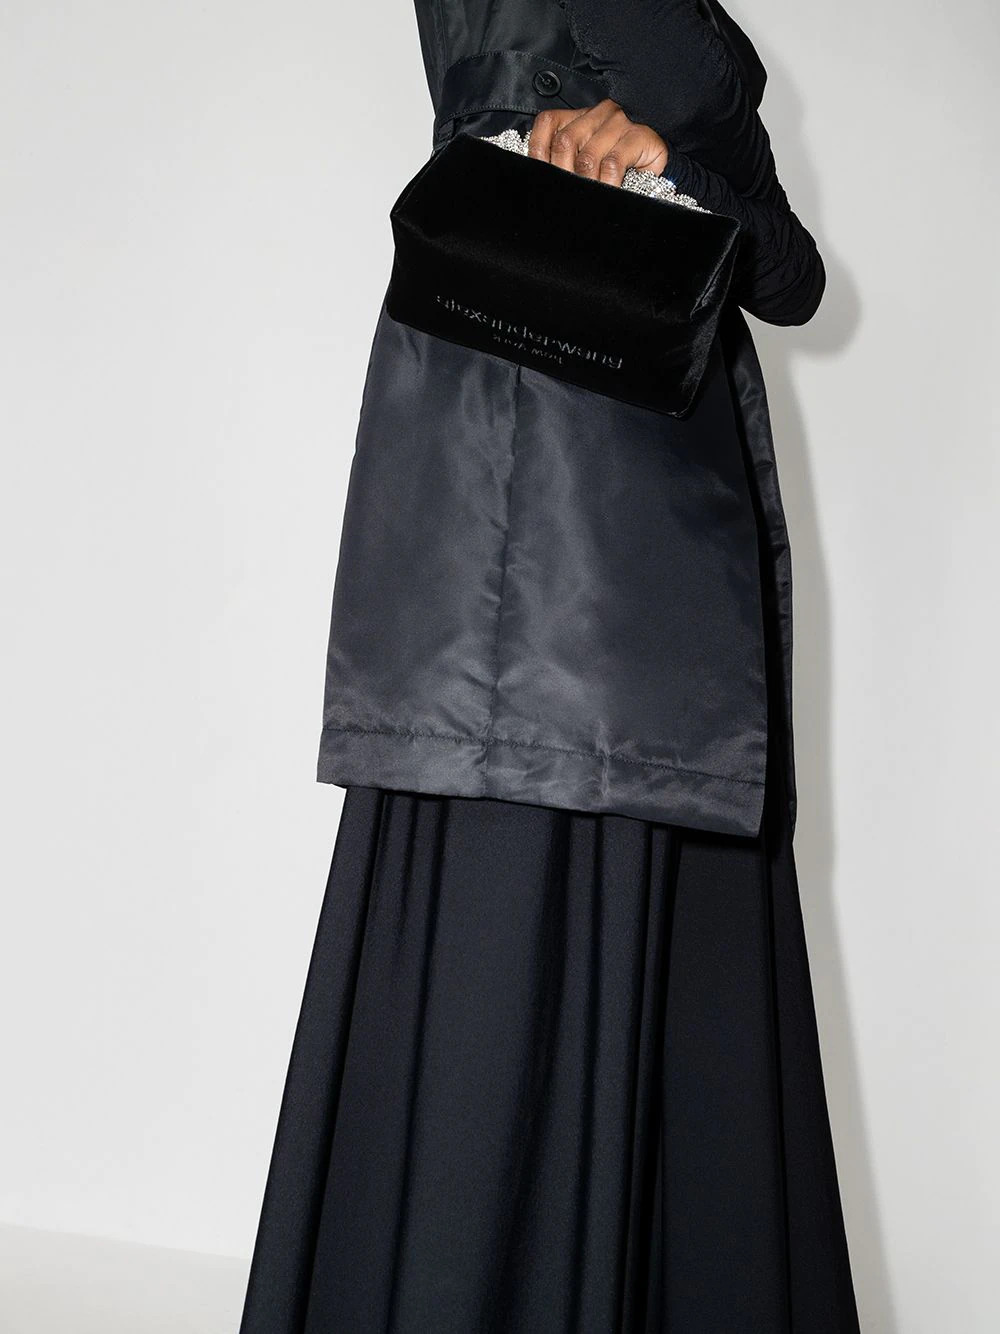 Dolce & Gabbana Medium Sicily Leather Top Handle Bag with Crystal Logo -  ShopStyle